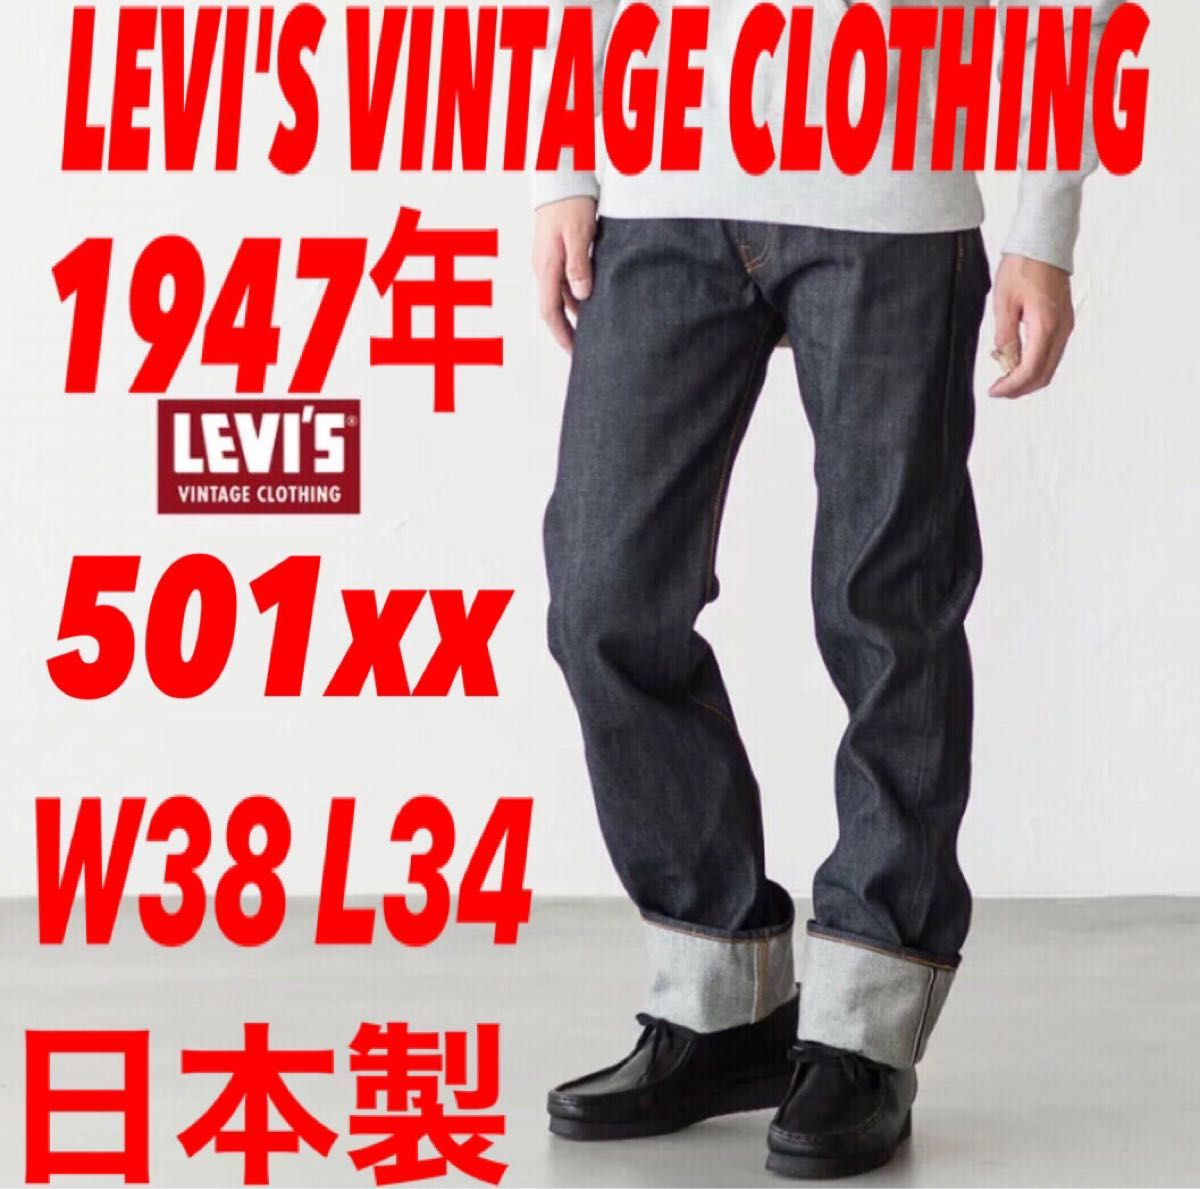 LEVI'S VINTAGE CLOTHING501xx 1947年モデル 日本製 W38